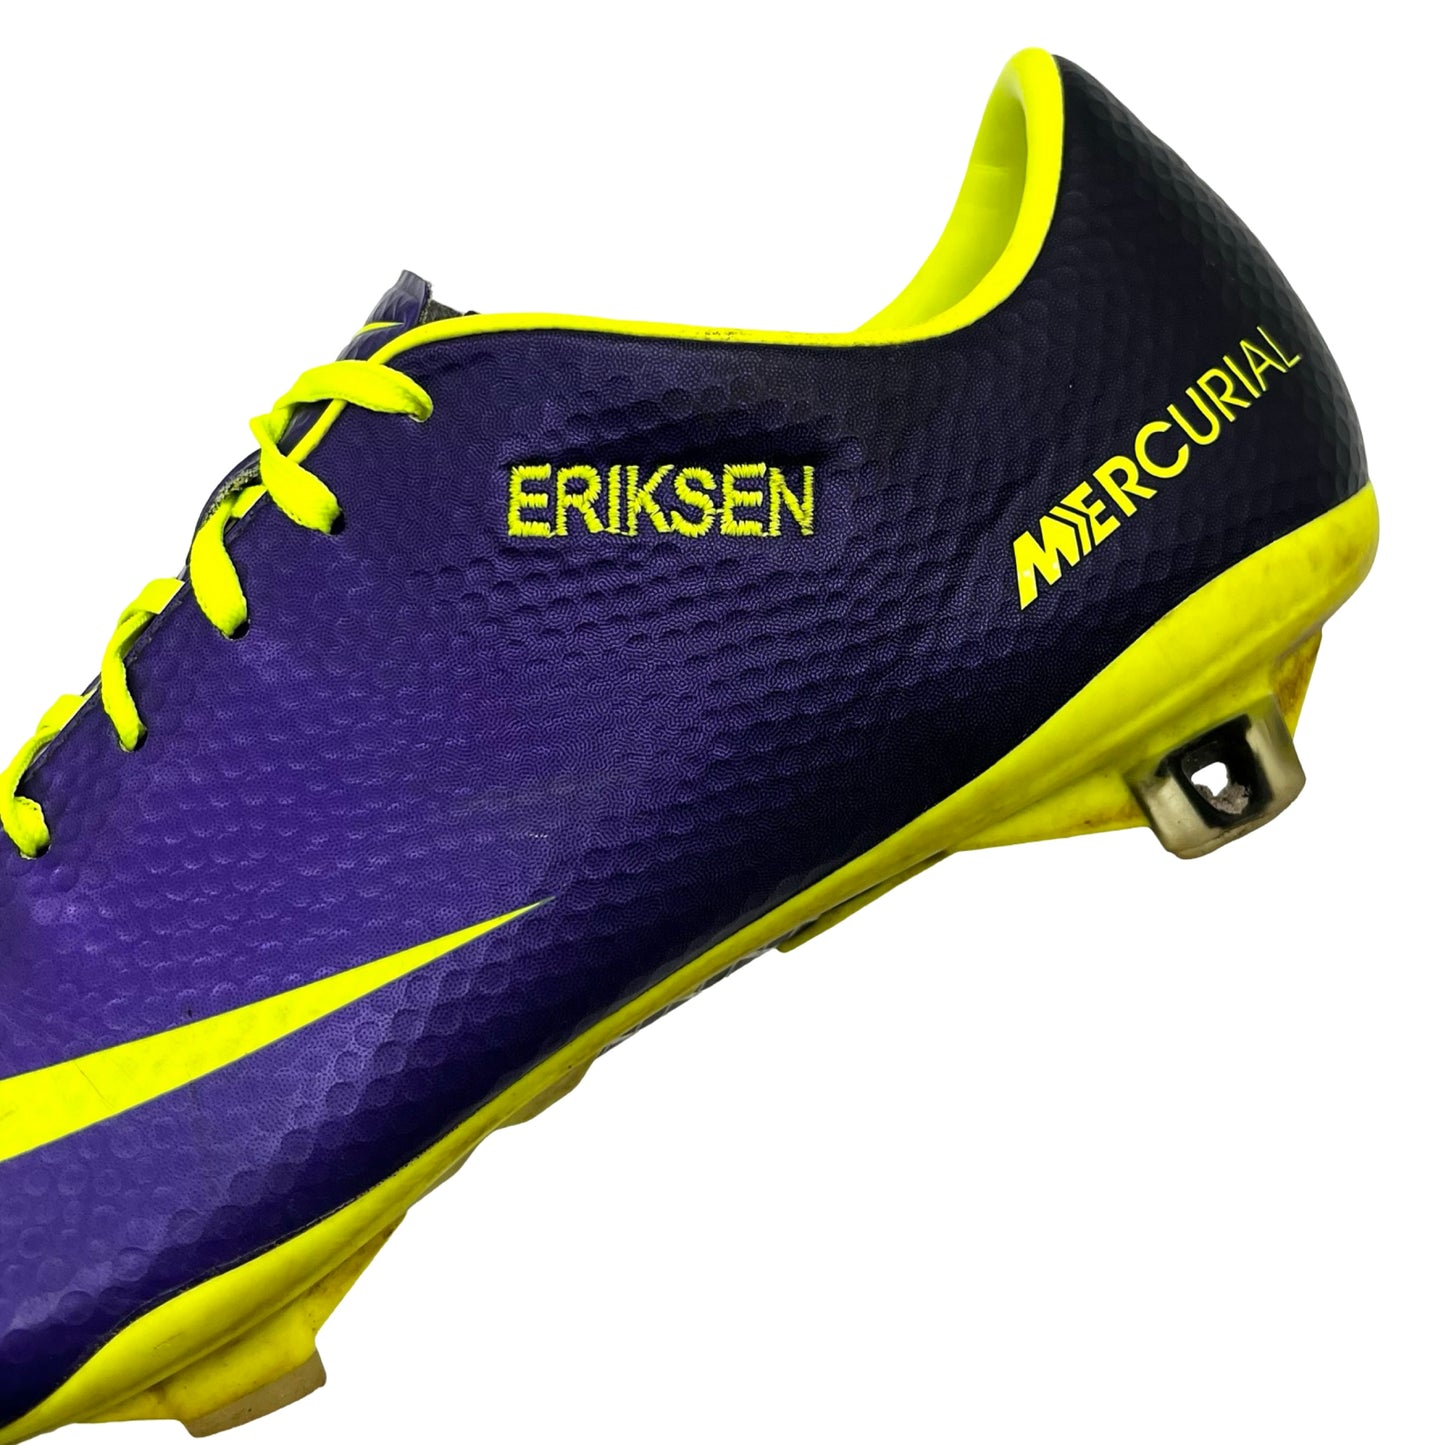 Christian Eriksen Match Worn Nike Mercurial Vapor IX